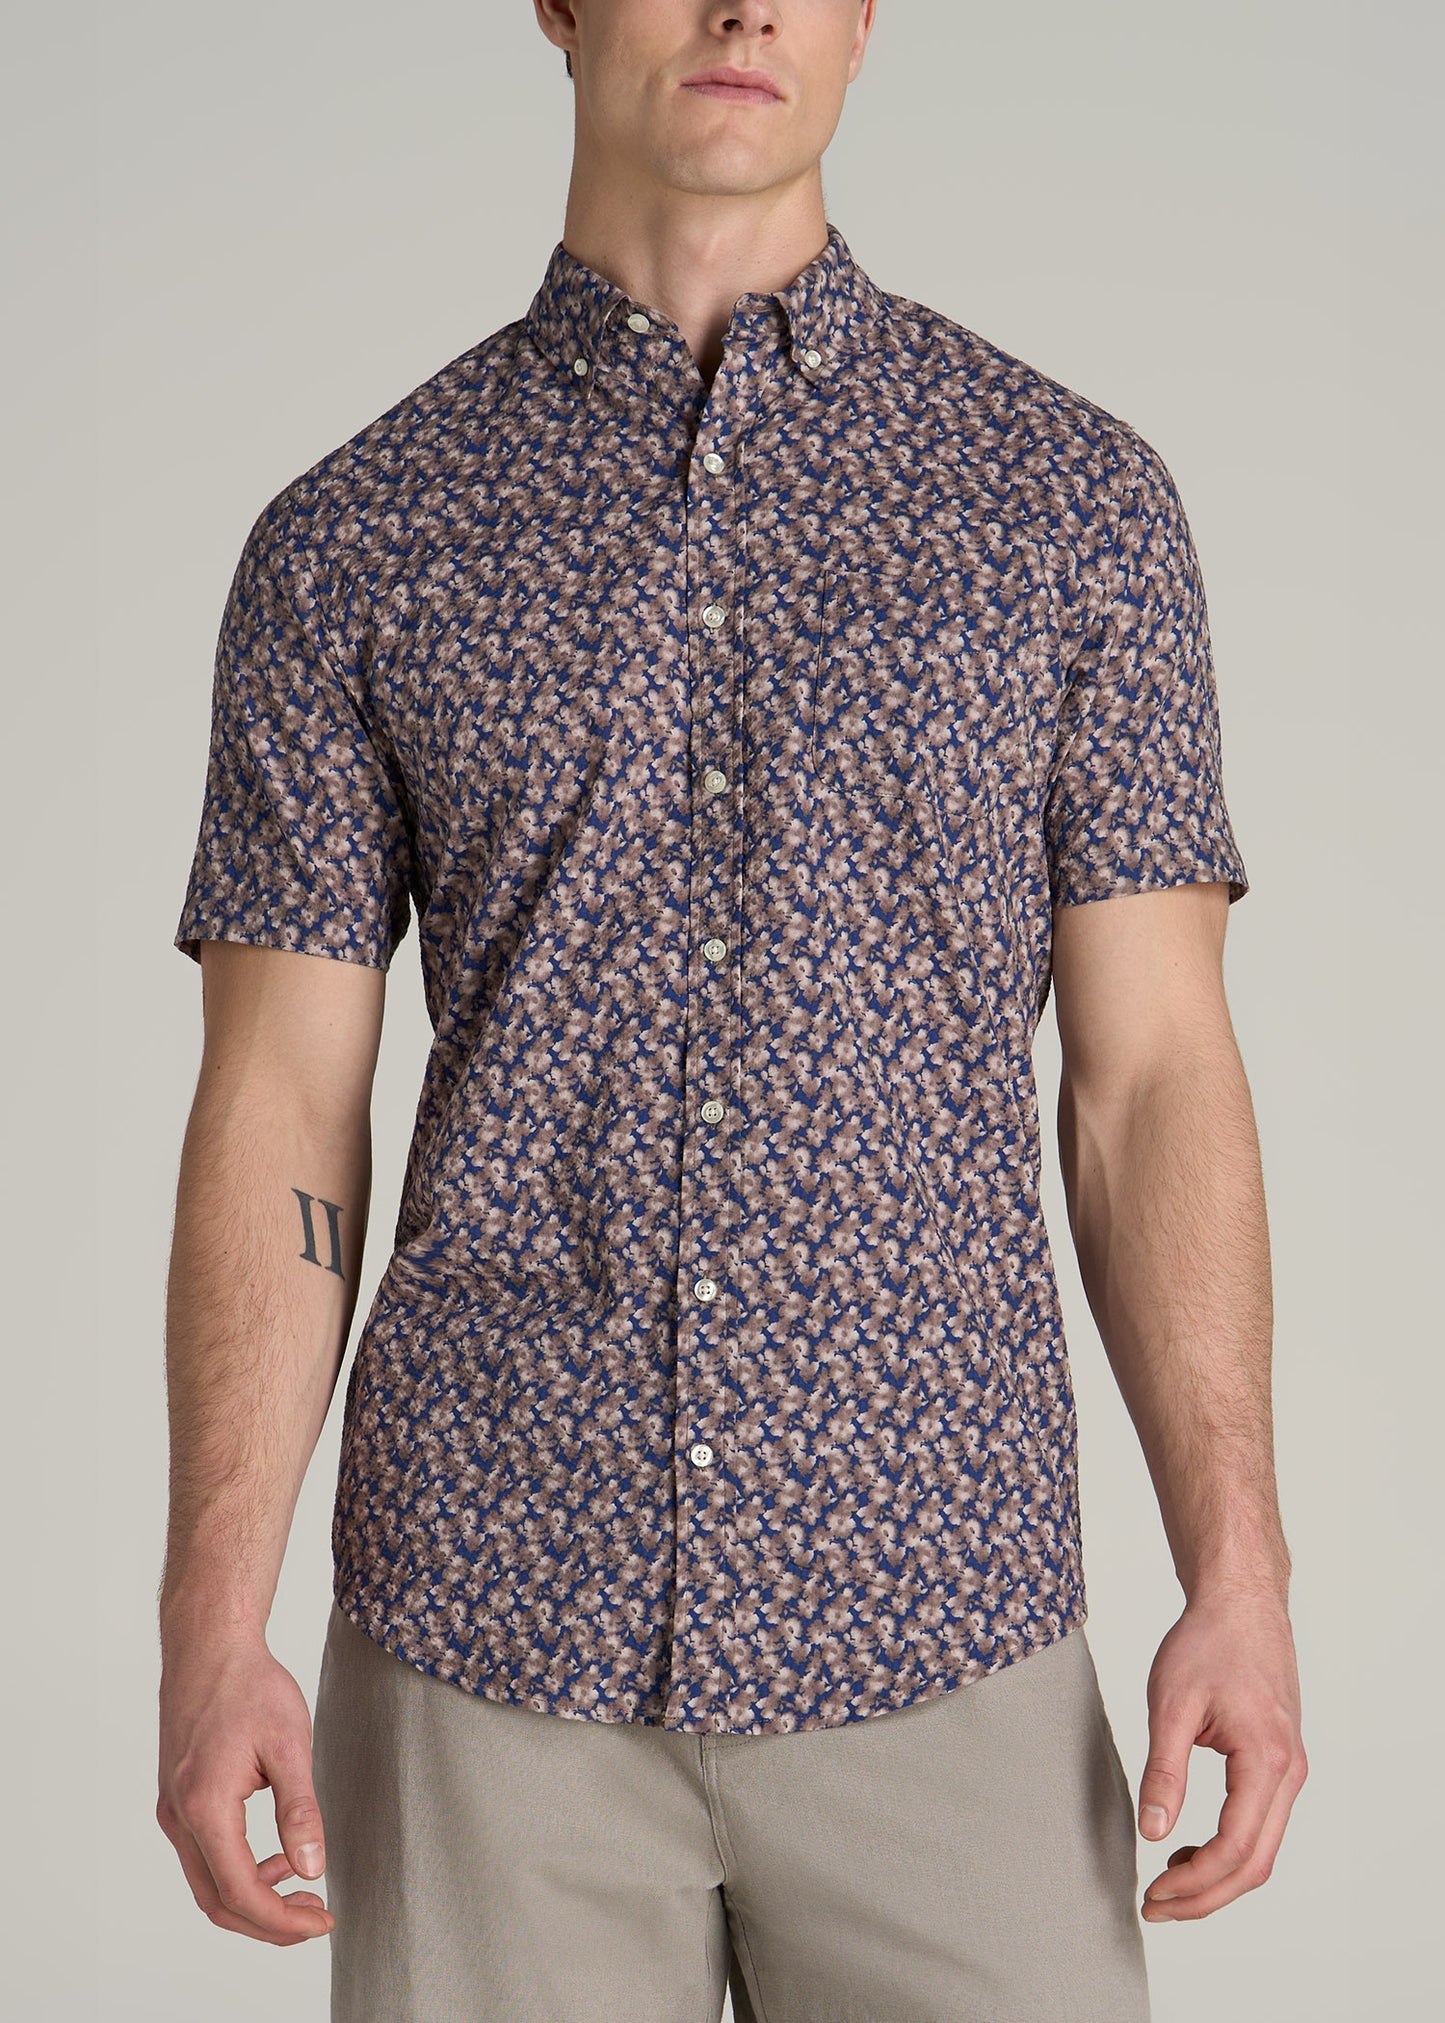 Seersucker Tall Men's Short Sleeve Shirt in Beige & Indigo Blossom Print